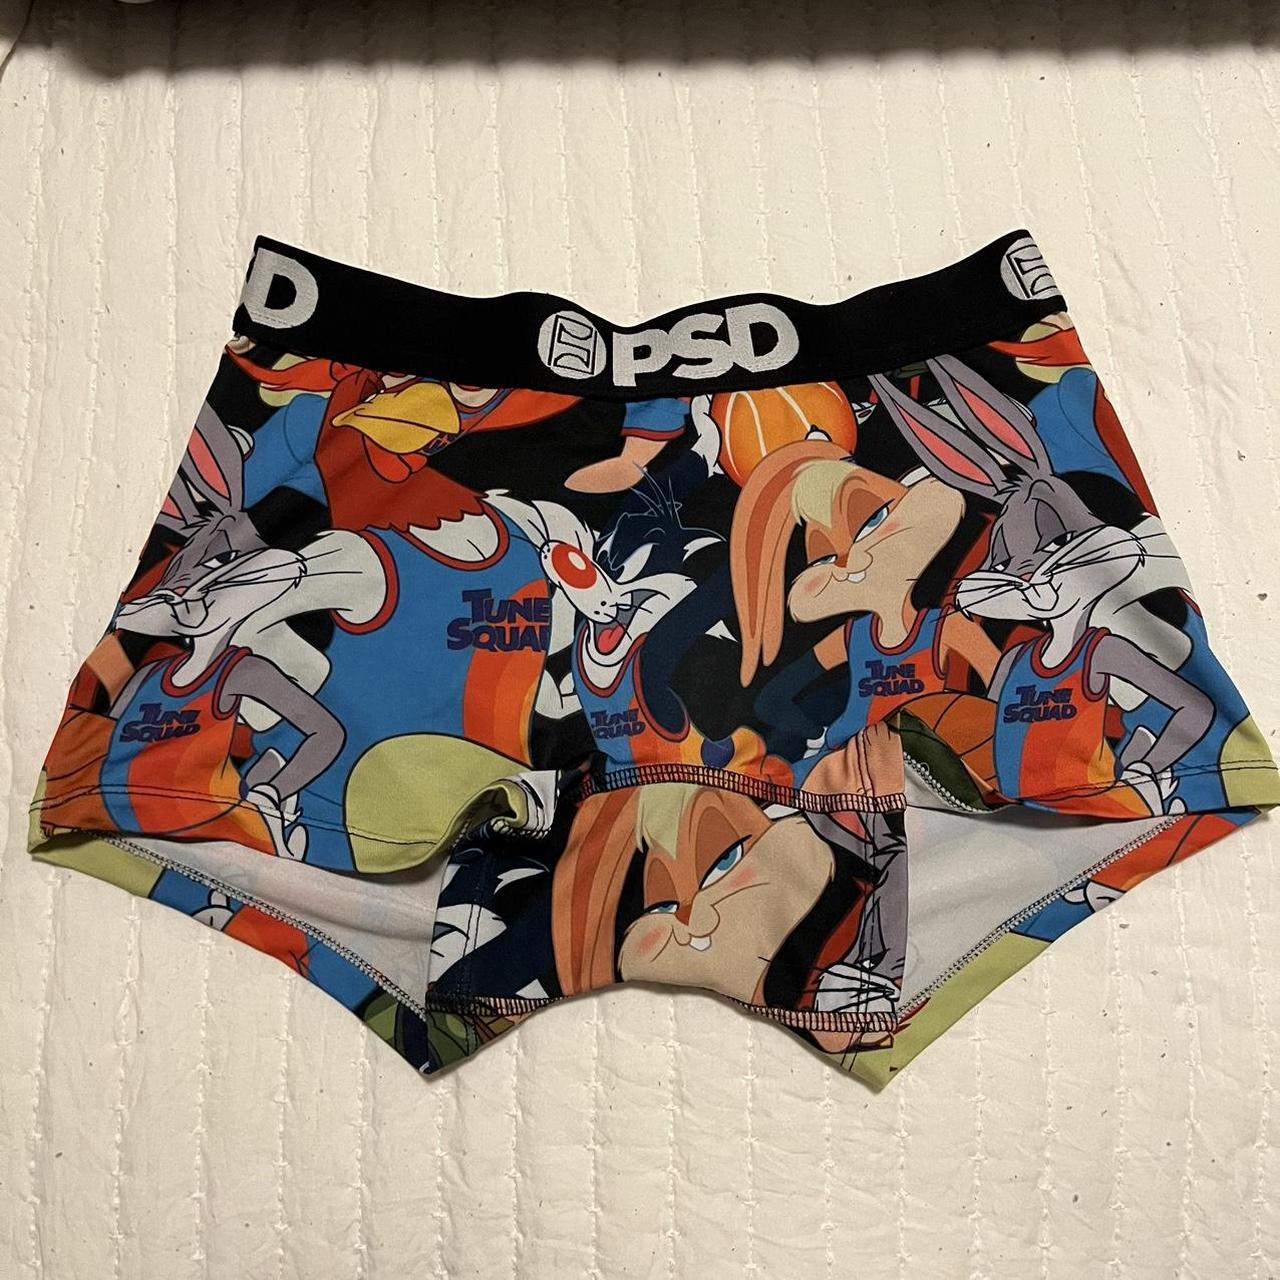 PSD Underwear PowerPuff Sports Bra and Shorts Large - Depop